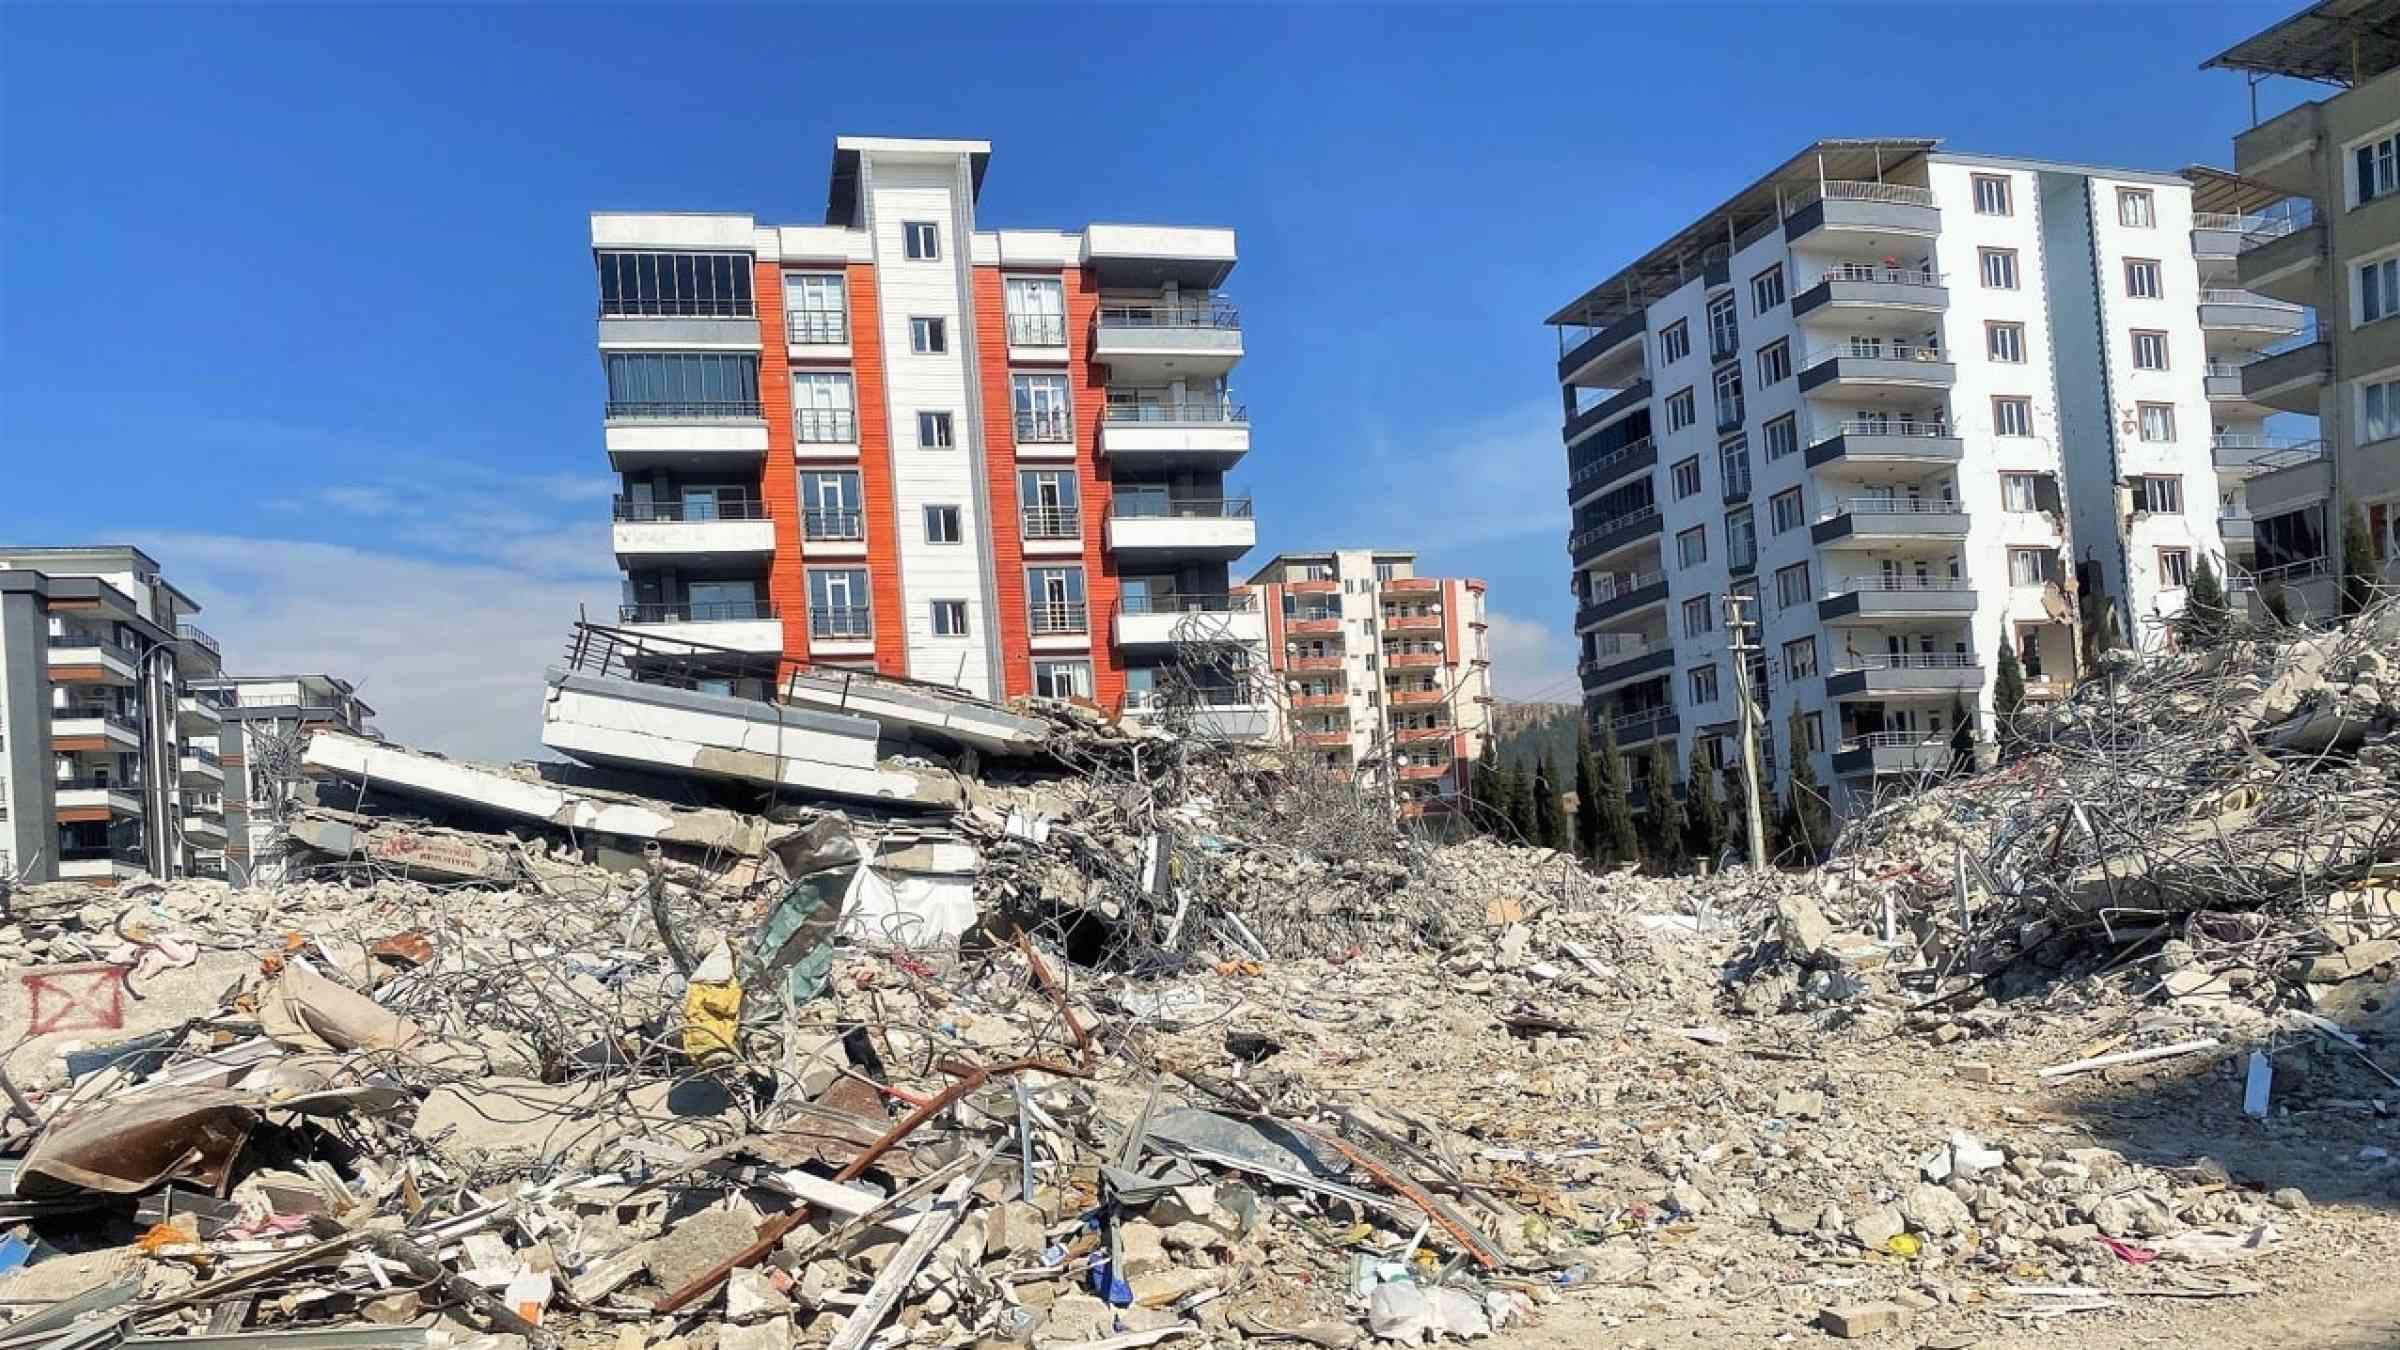 Collapsed buildings following the Türkiye earthquakes